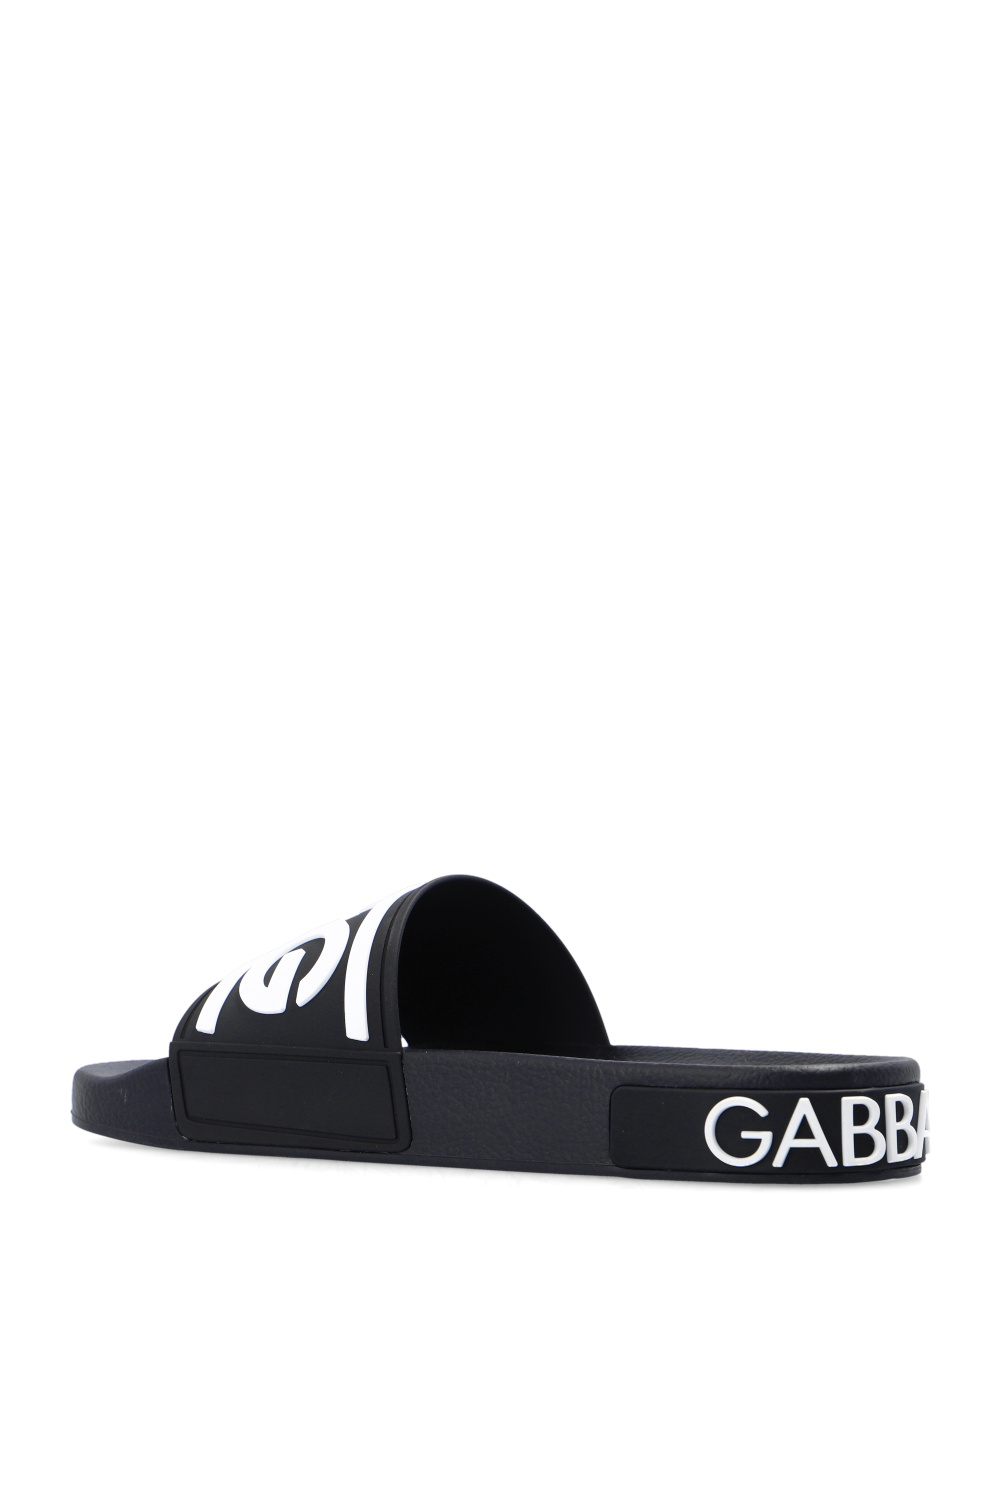 heeled sandals dolce gabbana shoes ‘Ciabatta’ slides with logo